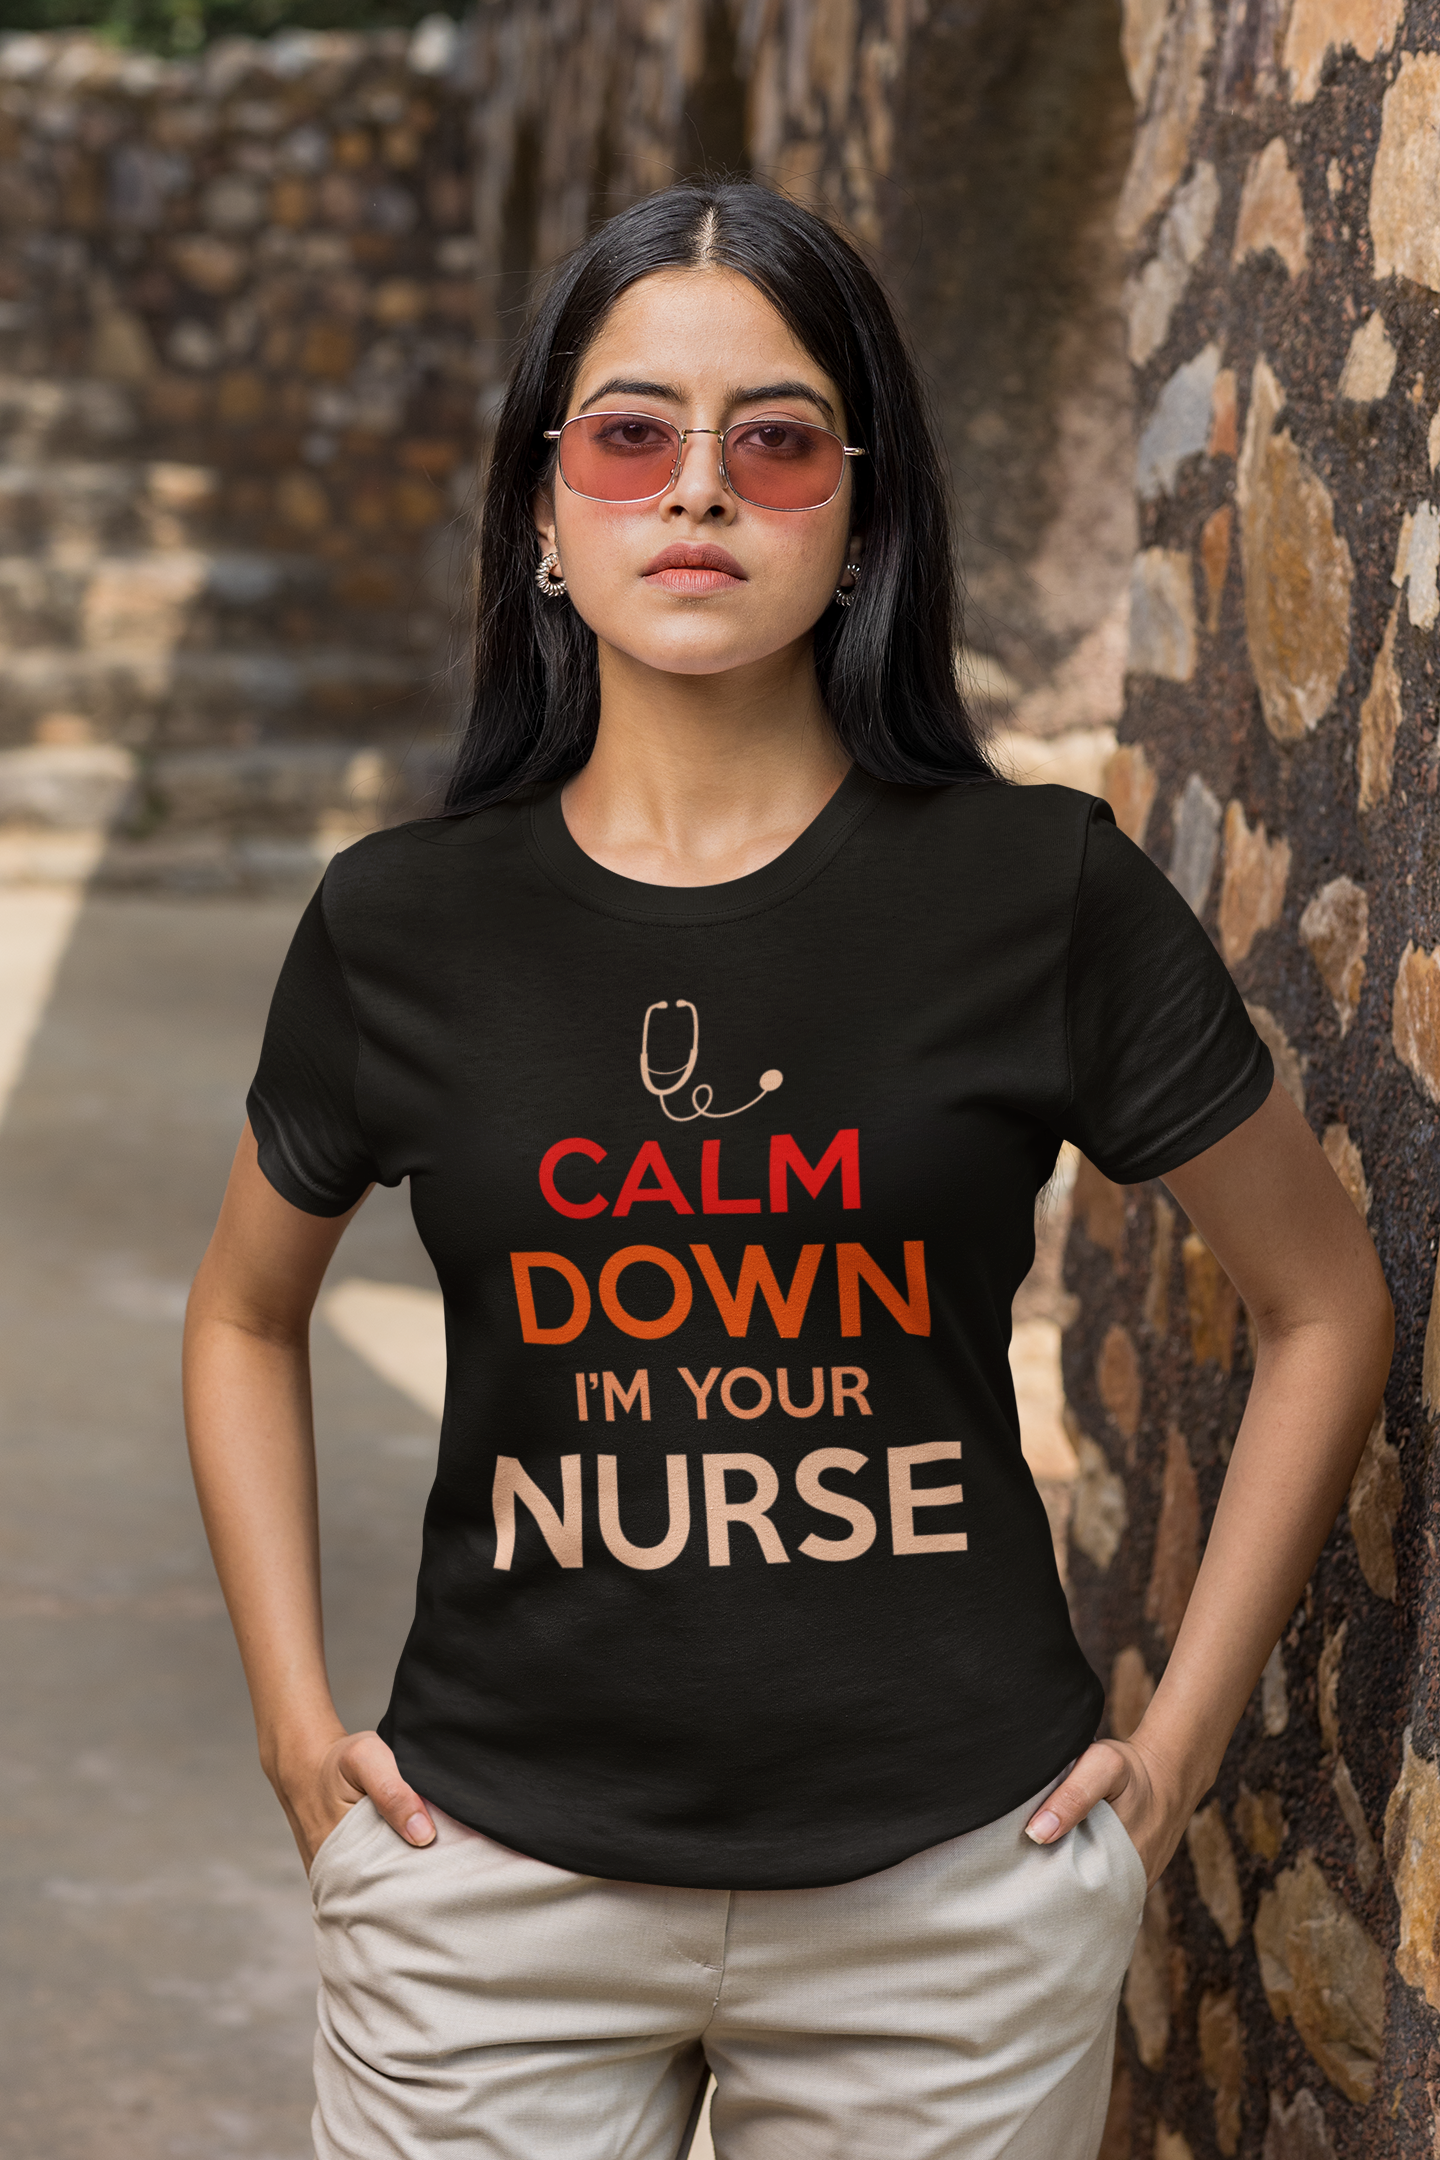 Calm Down I'm Your Nurse, Nursing Retirement Gifts, Nursing School, Nurse Shirt, Nurse Life, Medical Office Gift, Stethoscope Charm